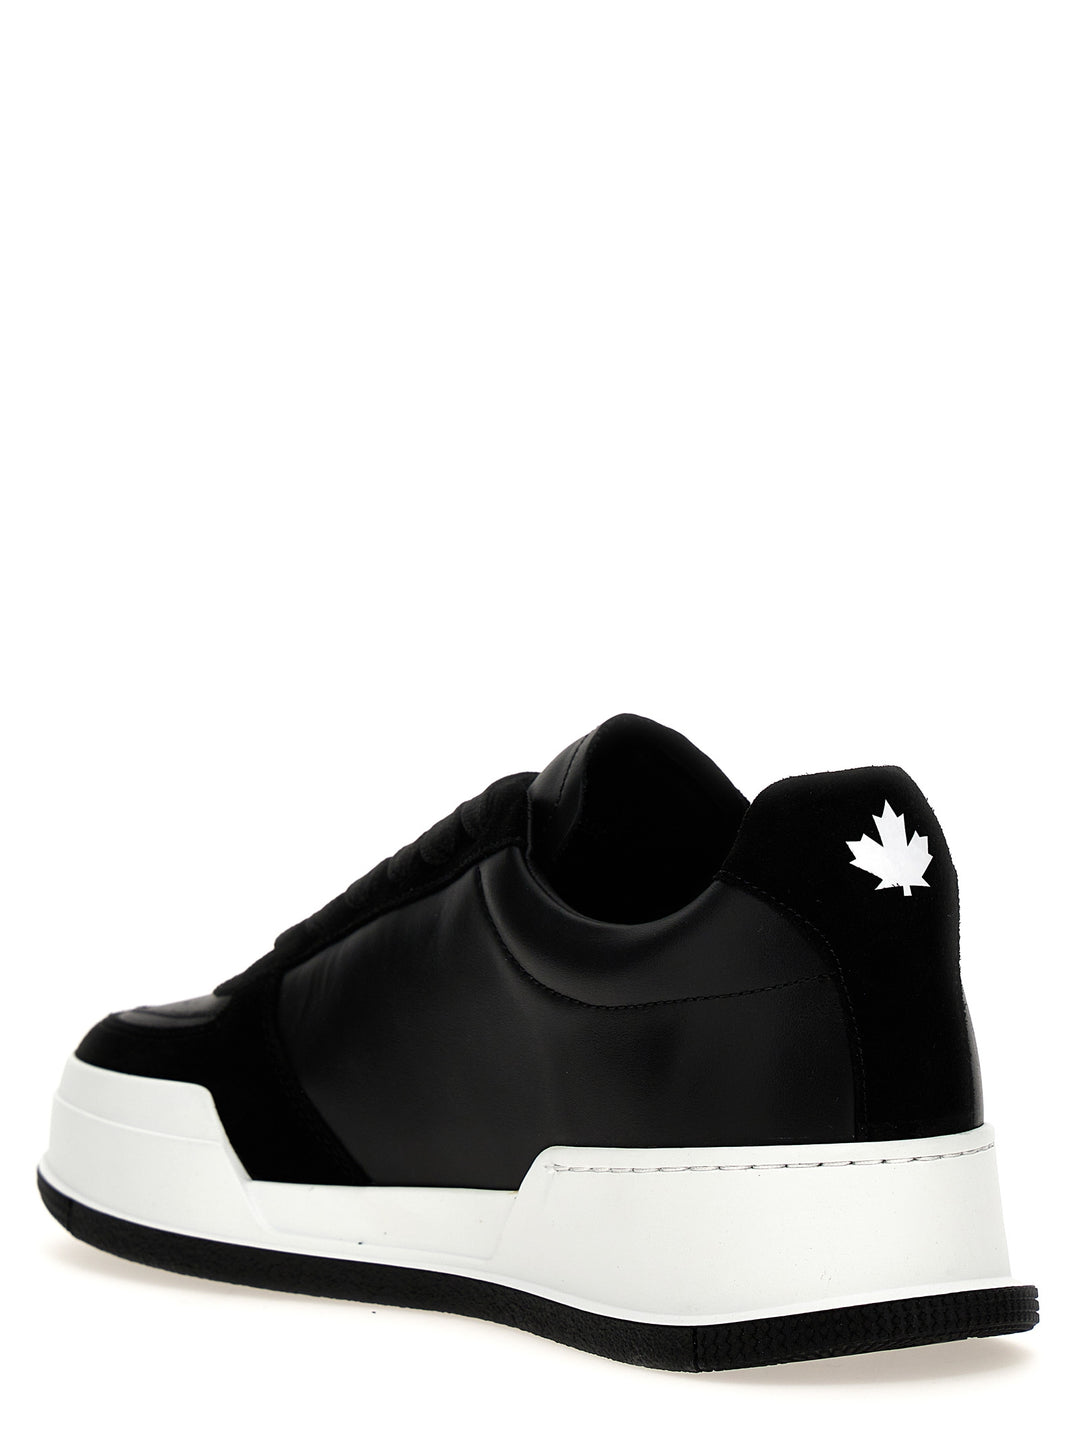 Canadian Sneakers Bianco/Nero